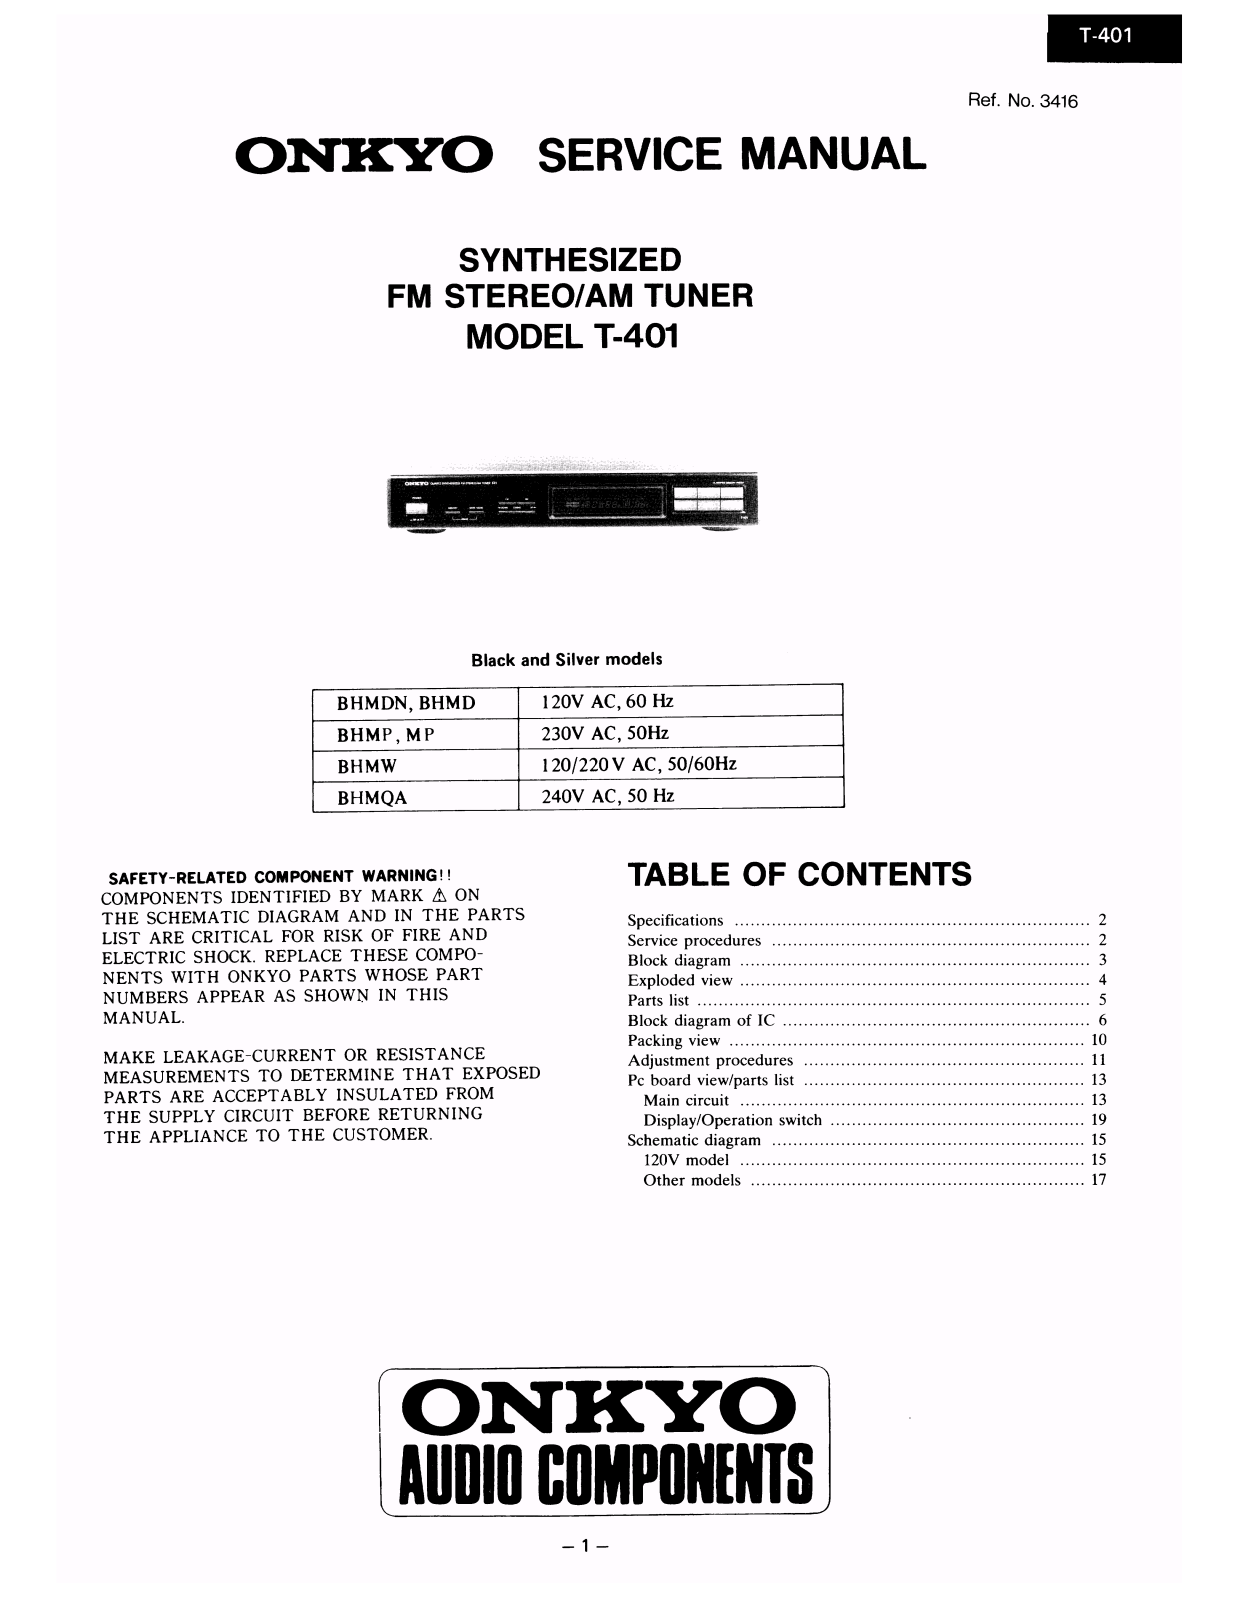 Onkyo T-401 Service manual